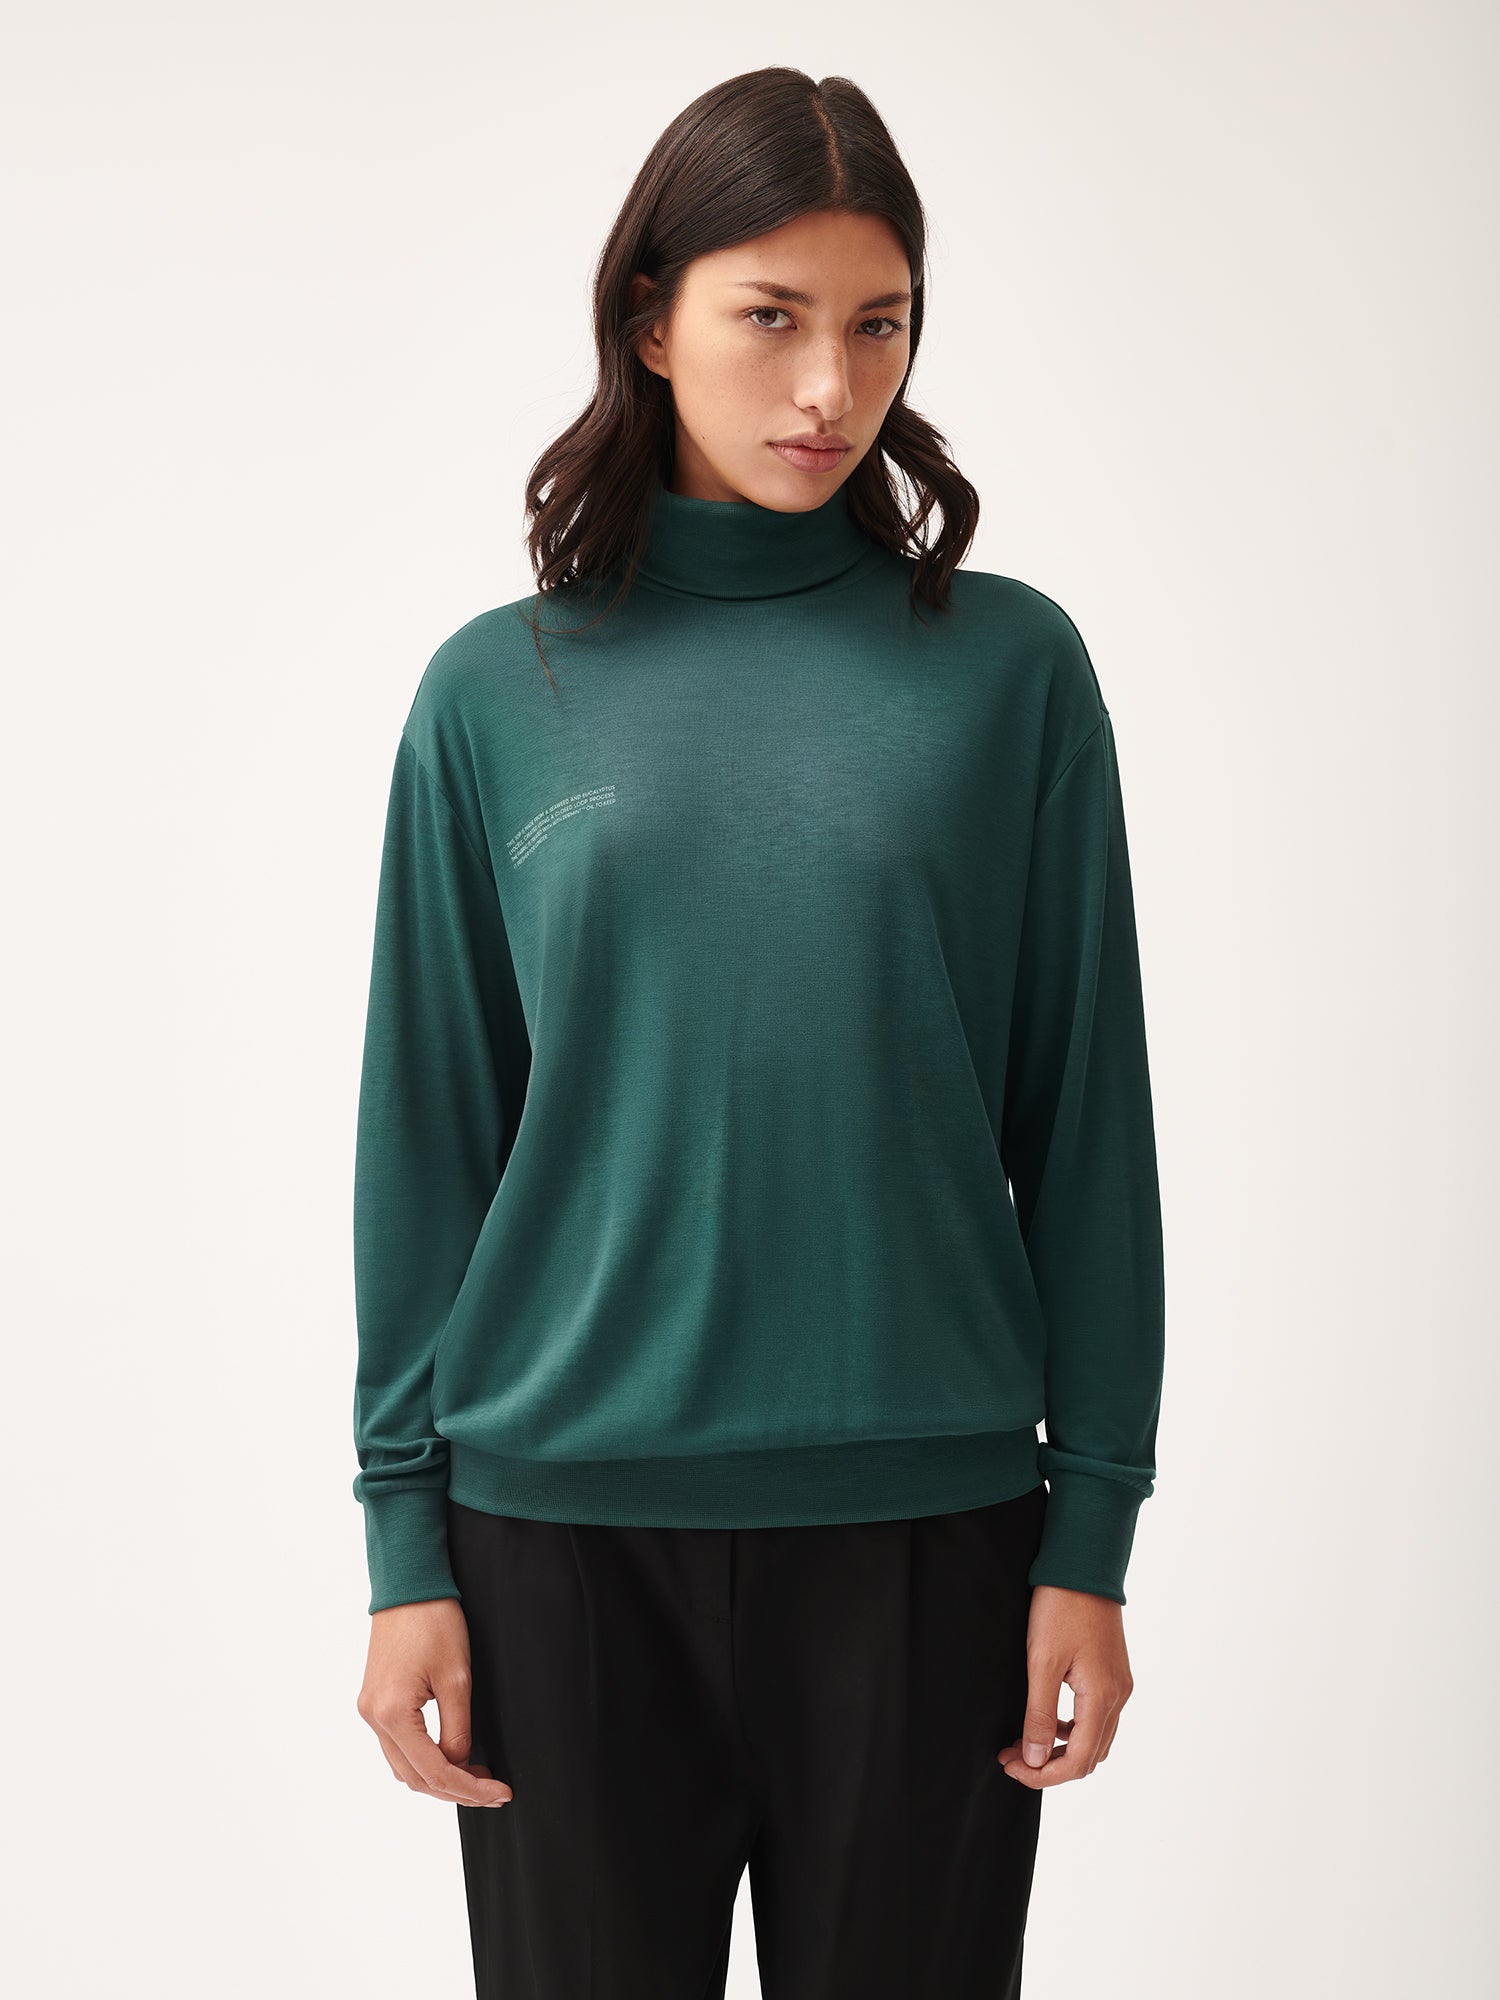 Womens_C-Fiber_Pure_Turtle_Neck_T-Shirt_Foliage_Green-1